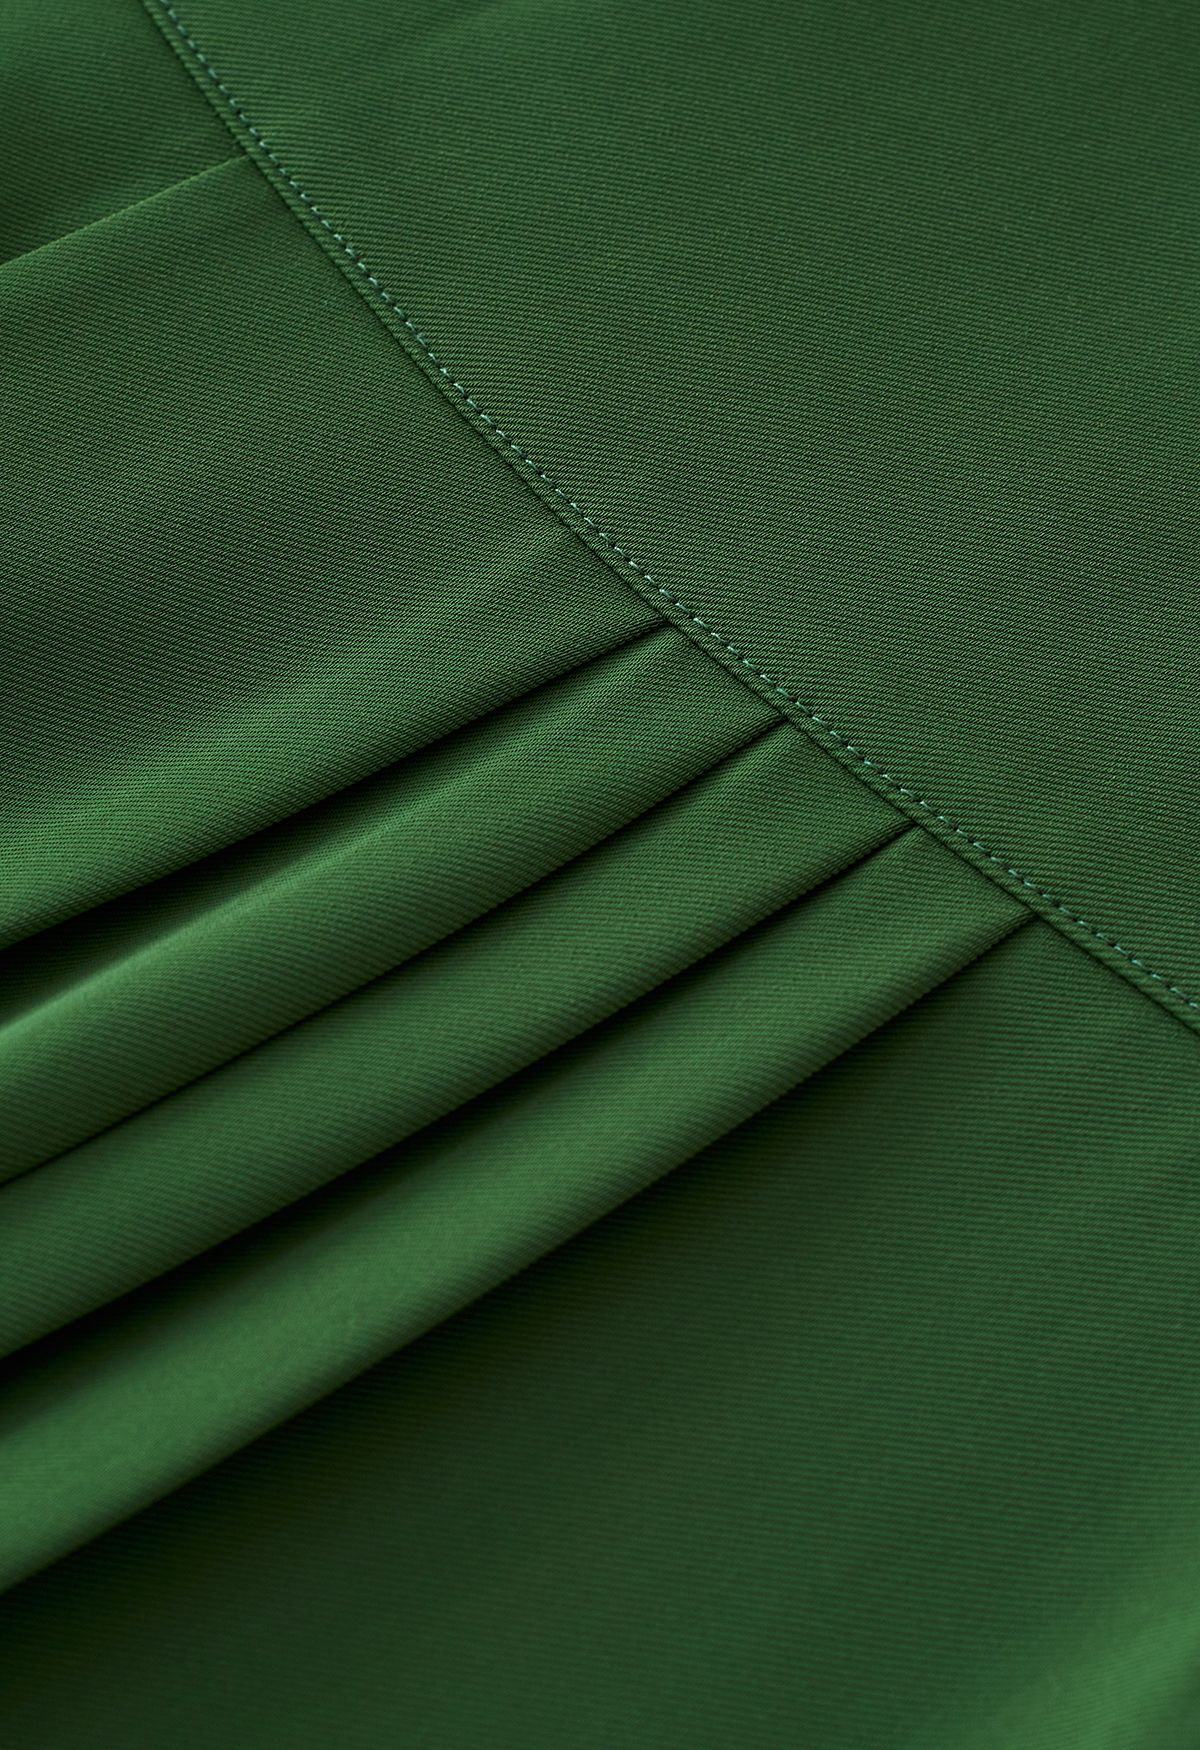 Bowknot عالية الخصر بنطلون واسع الساق باللون الأخضر الداكن